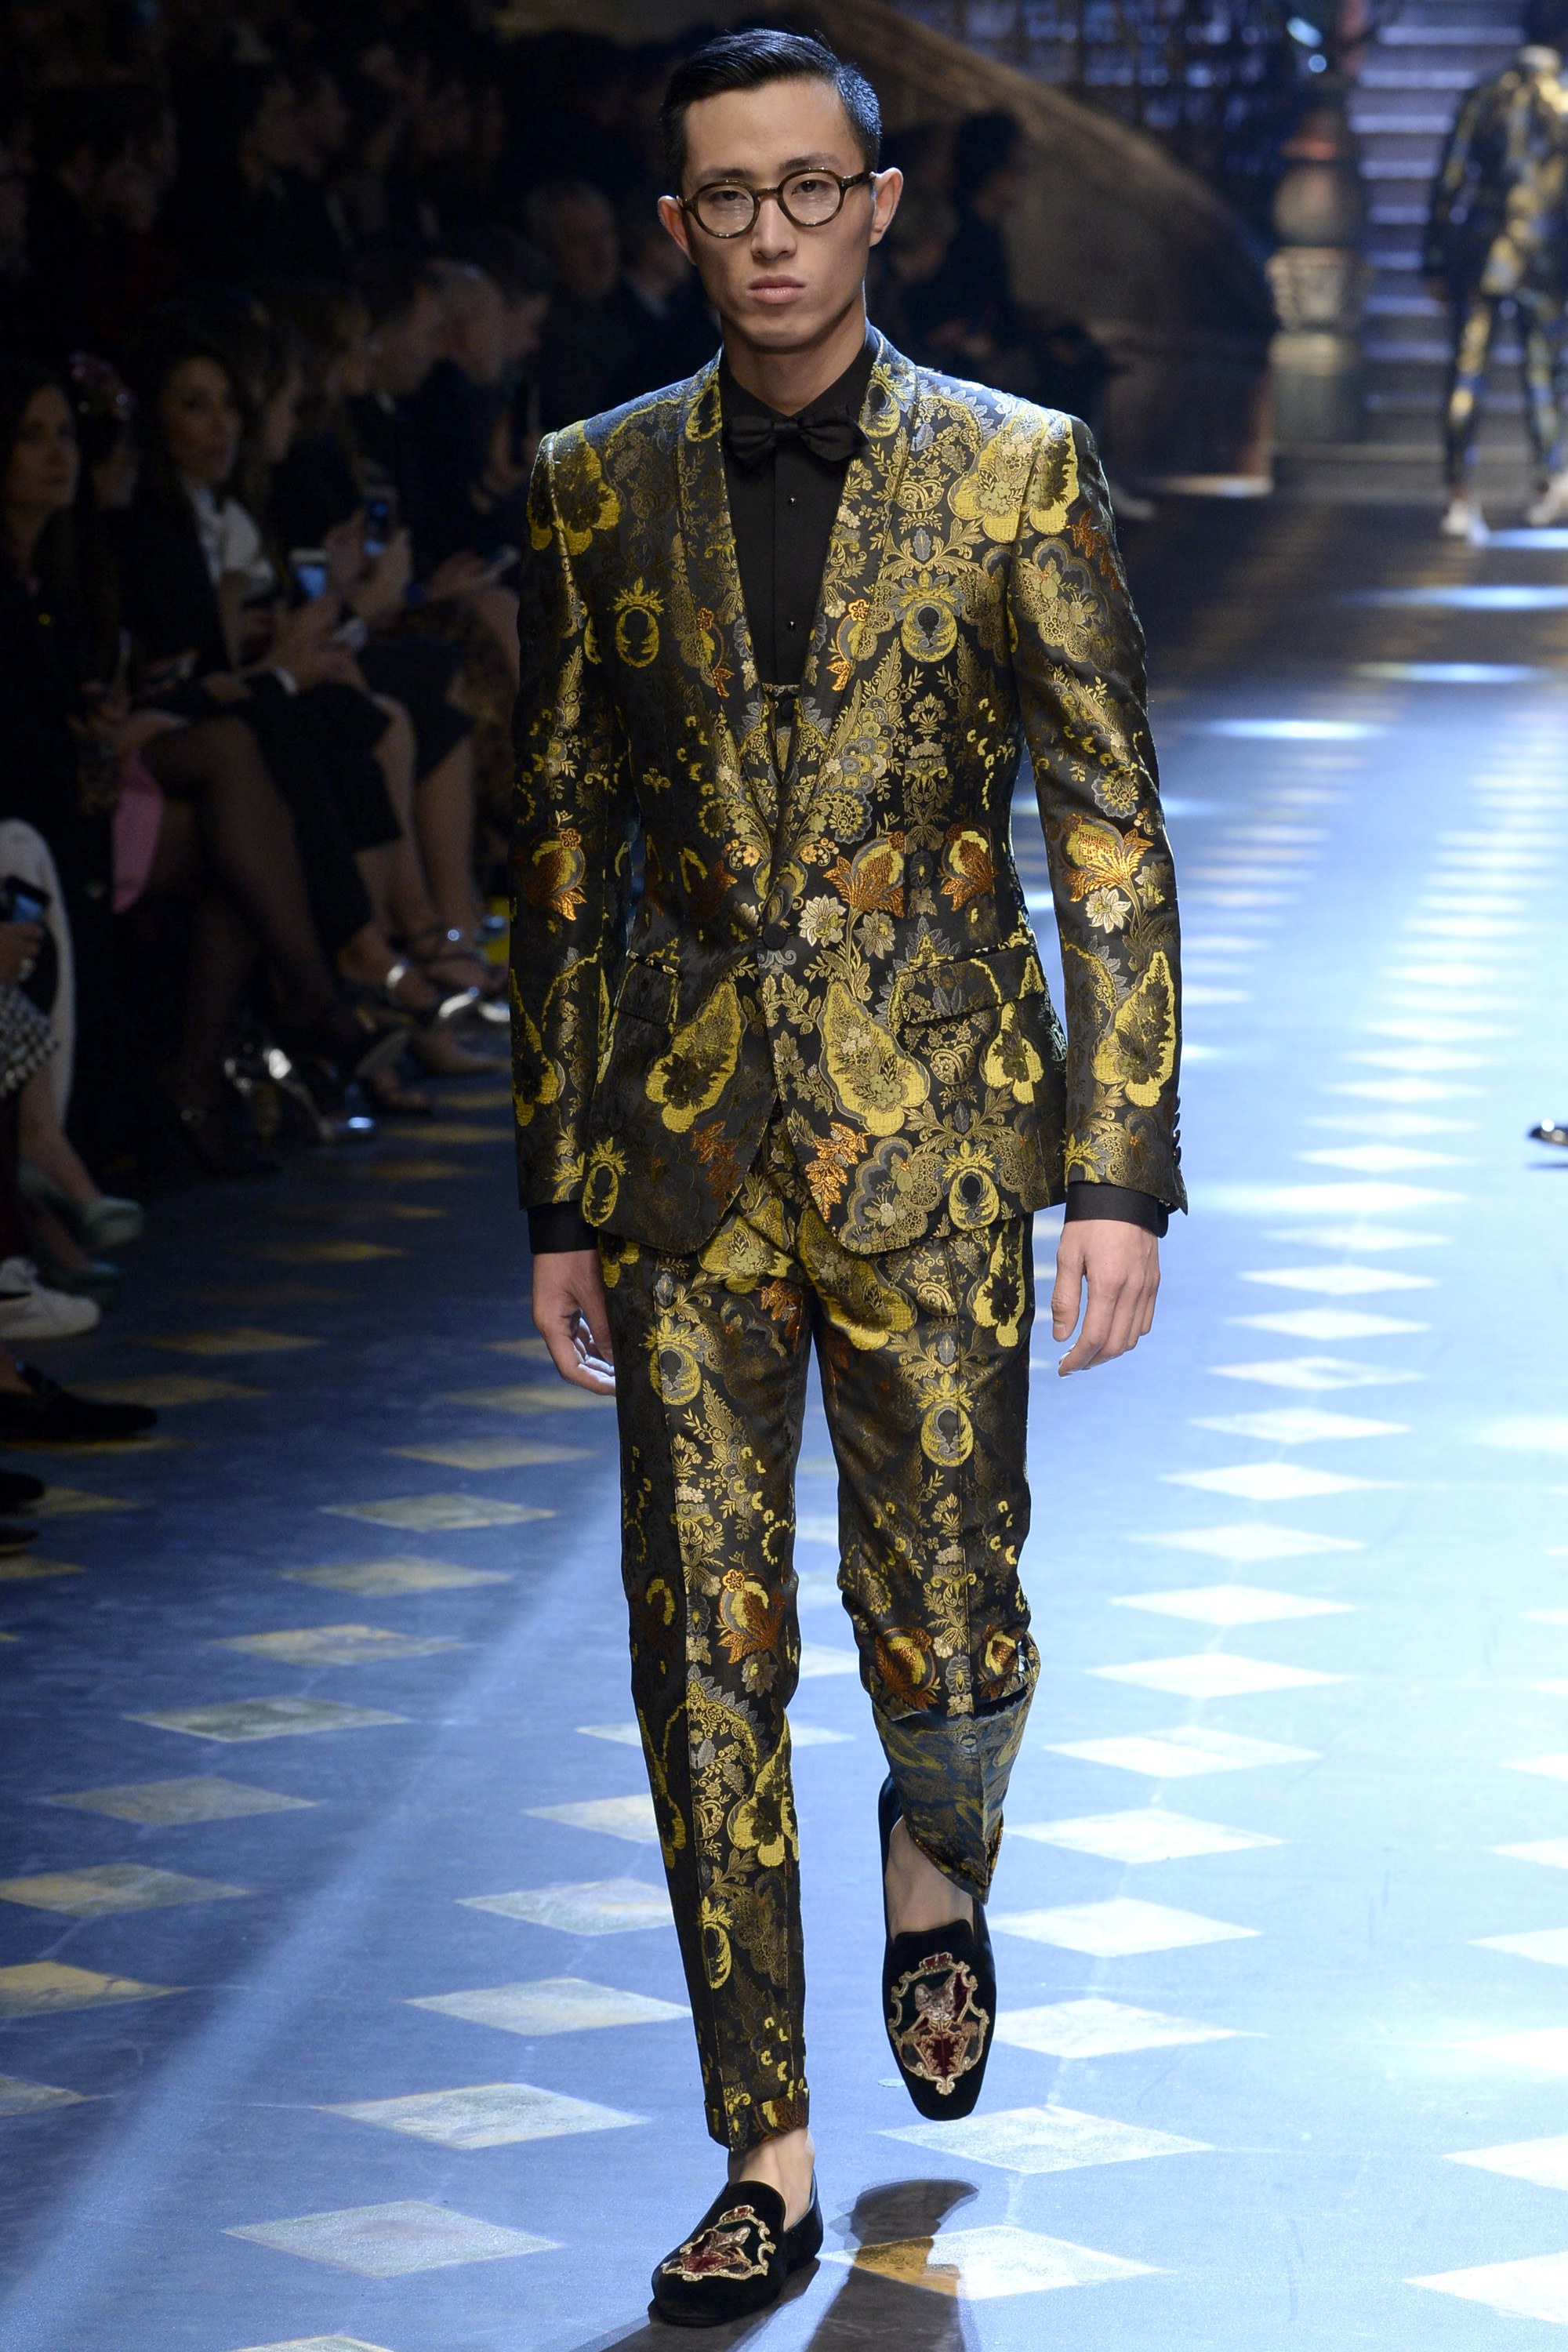 FW17 Fashion Week: Dolce & Gabbana and Louis Vuitton X Supreme - Dry ...